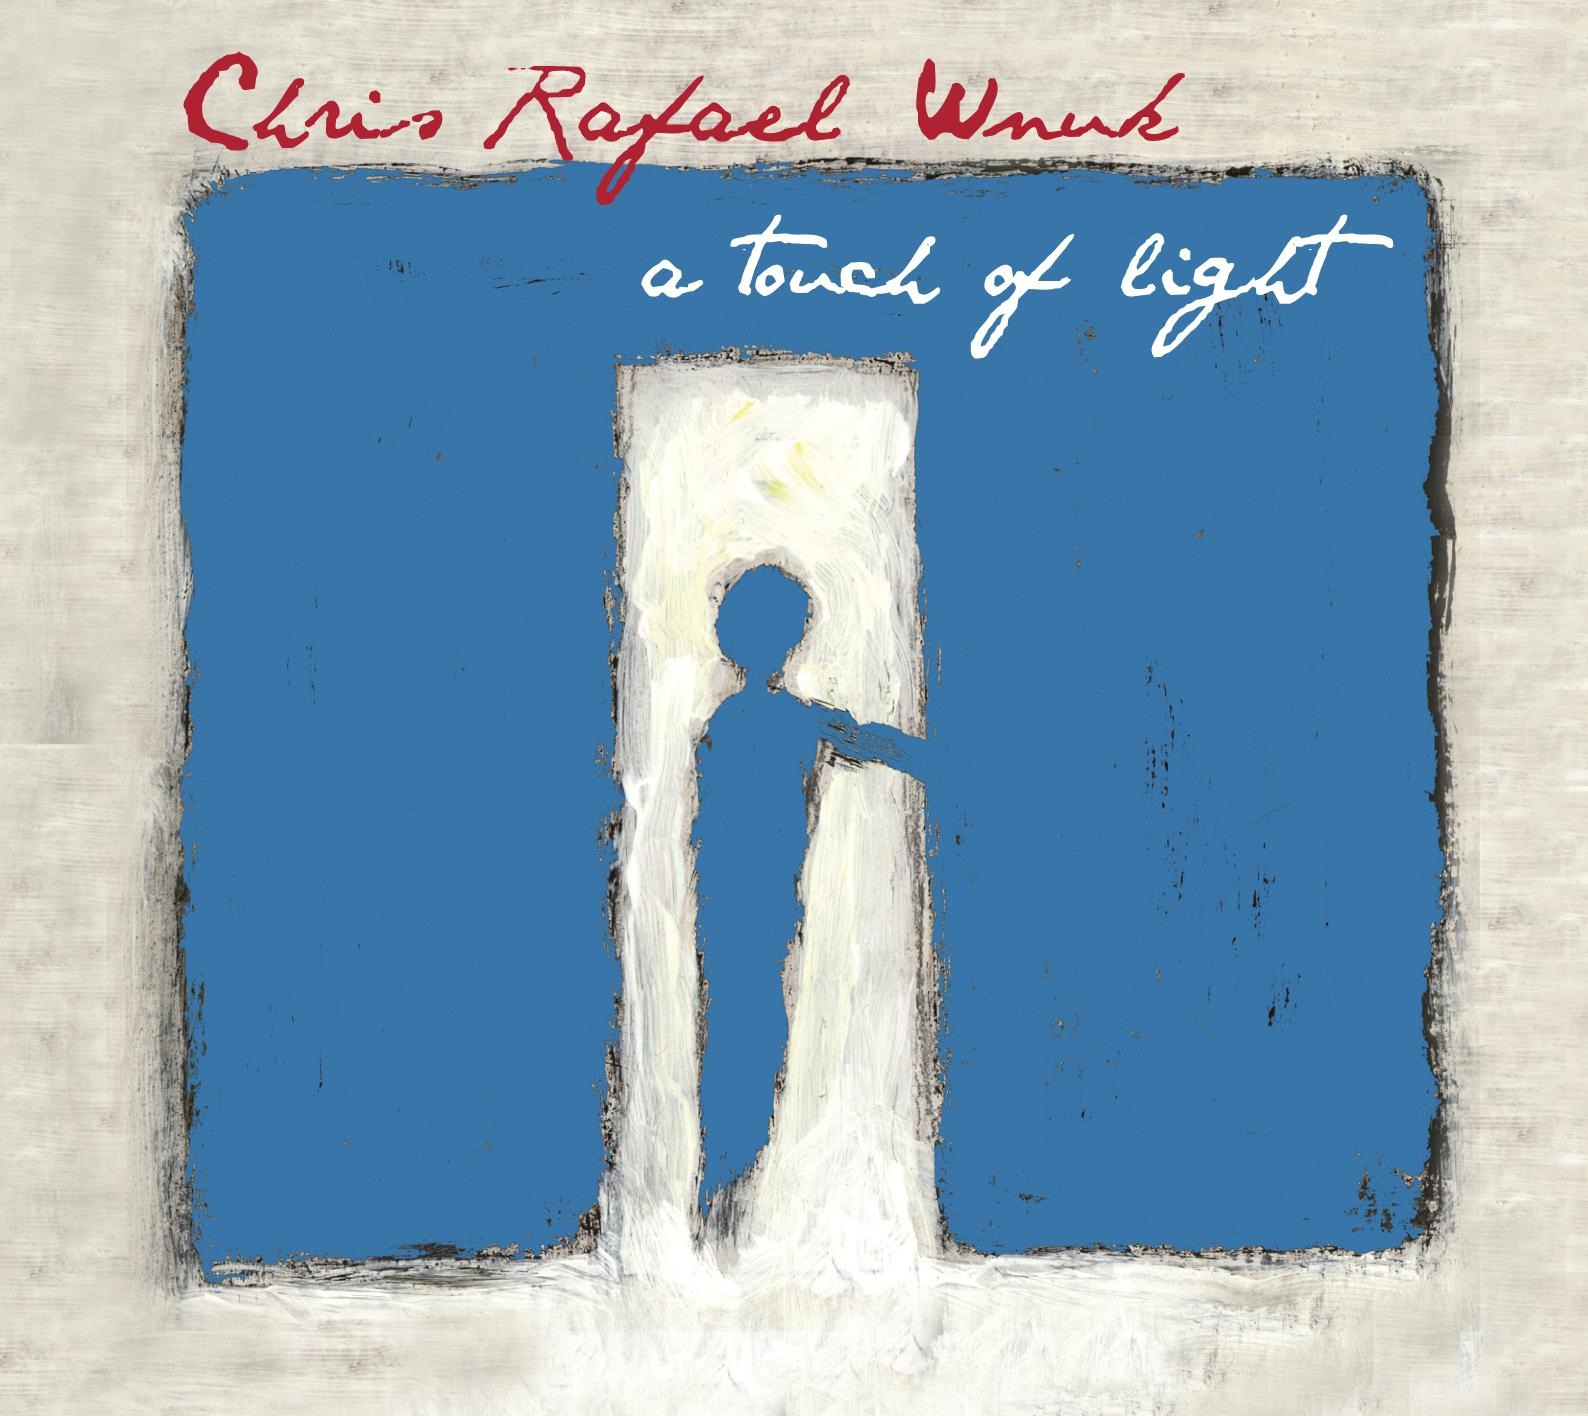 Chris Rafael Wnuk "A Touch of Light" (Universal Music Polska)